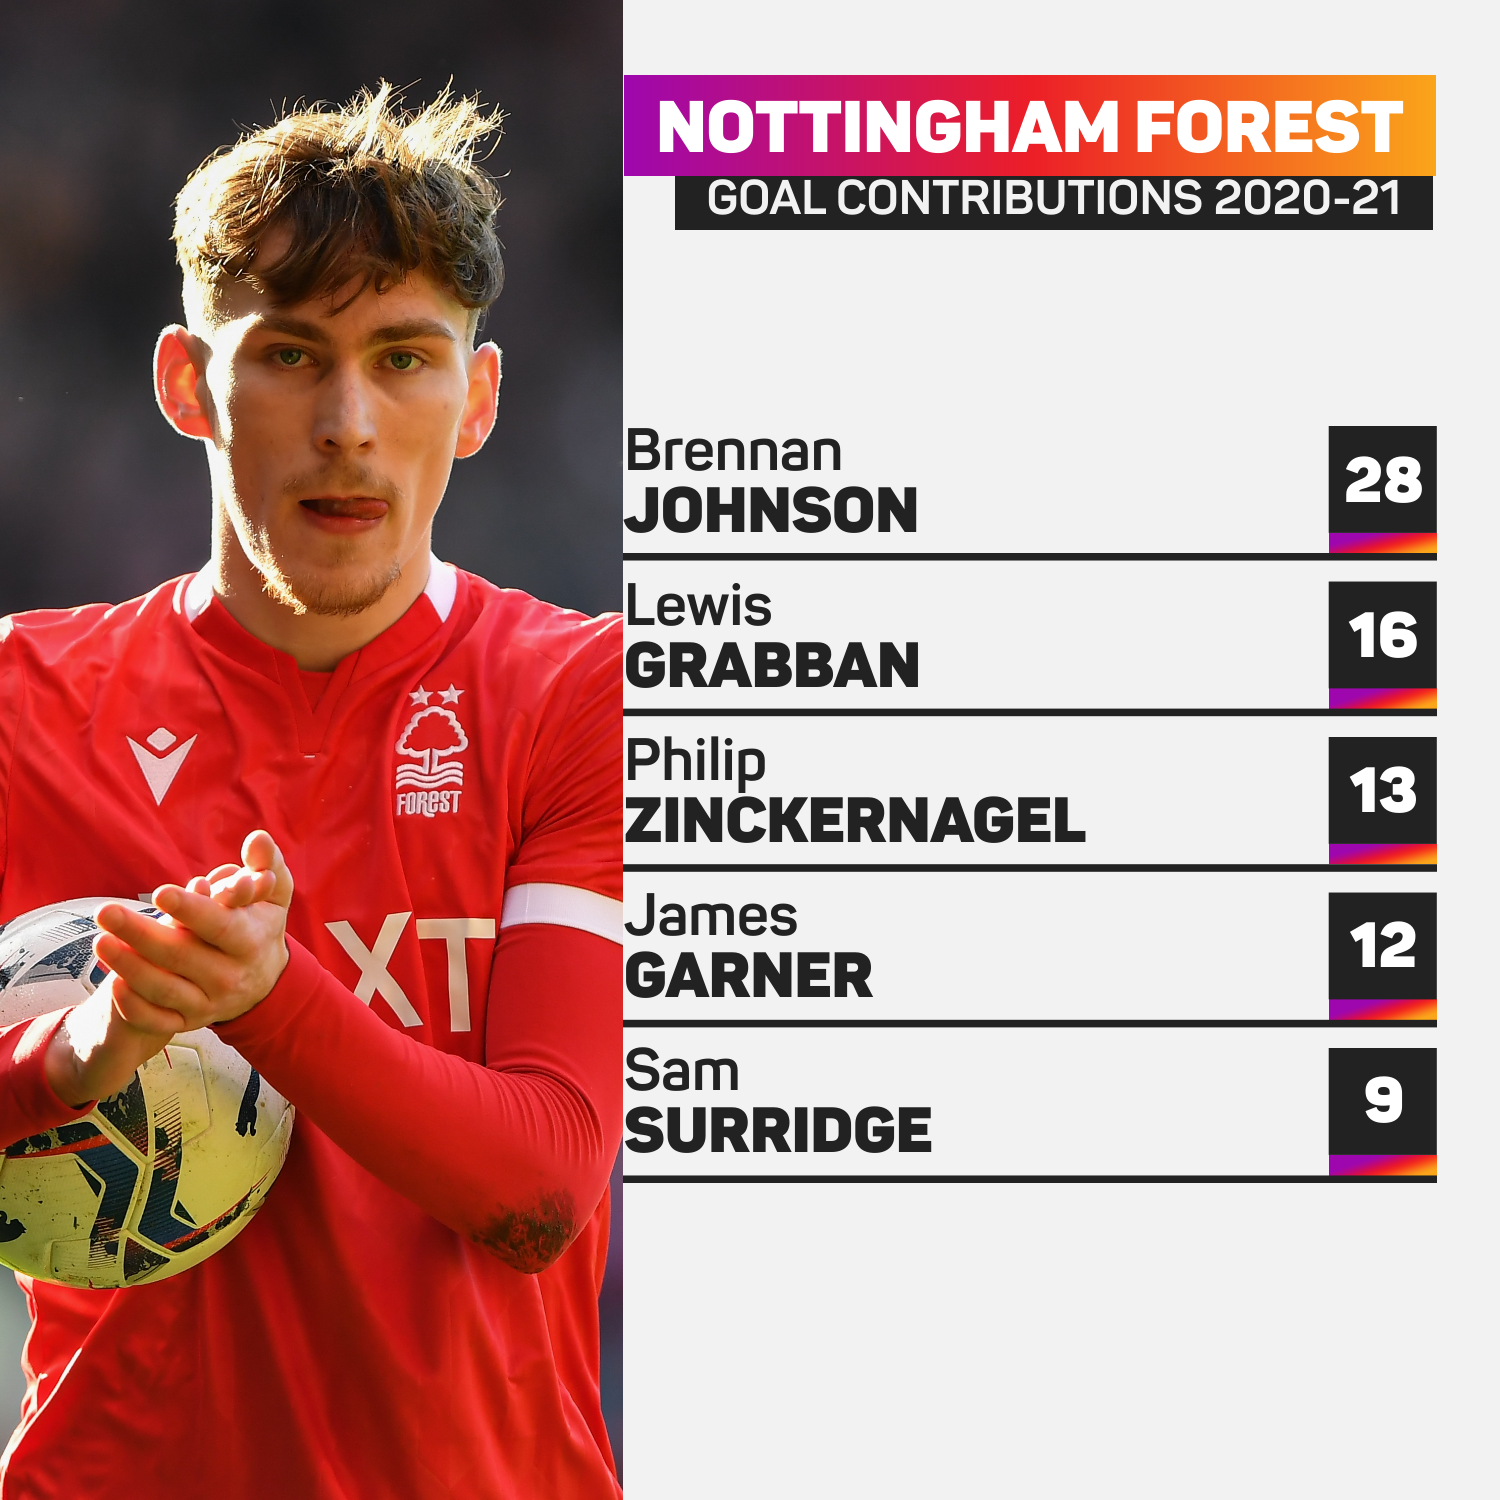 James Garner had 12 goal involvements for Nottingham Forest in 2020-21